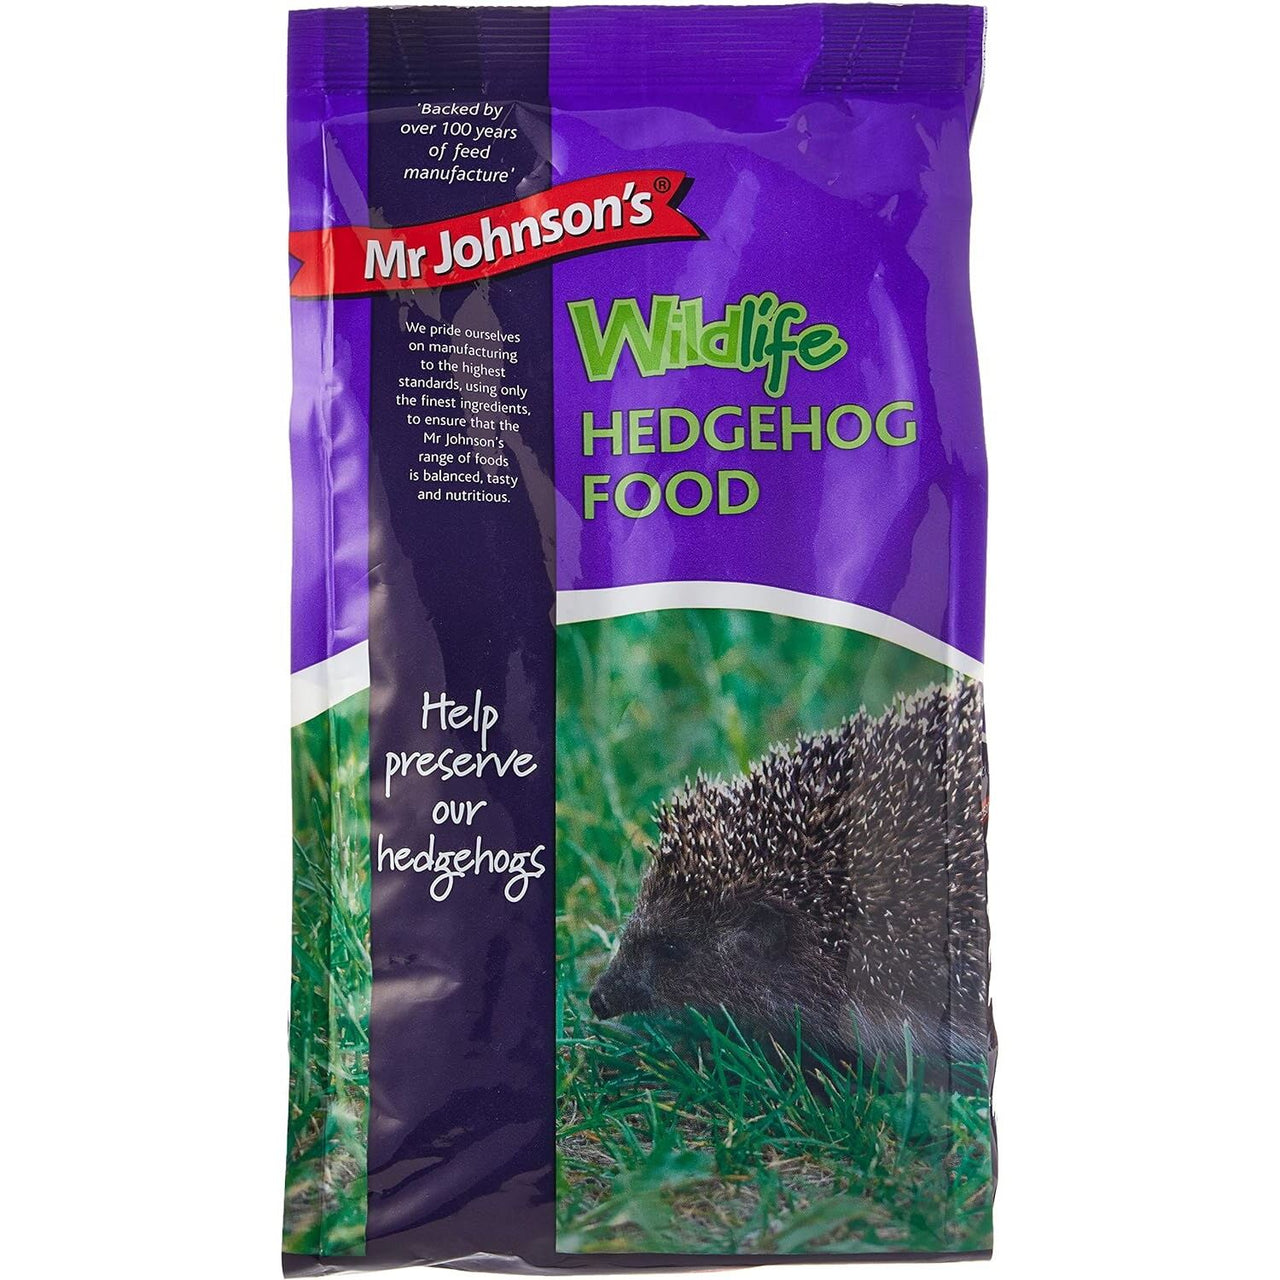 Mr Johnson's - Wild Life Hedgehog Food, 750g Pack